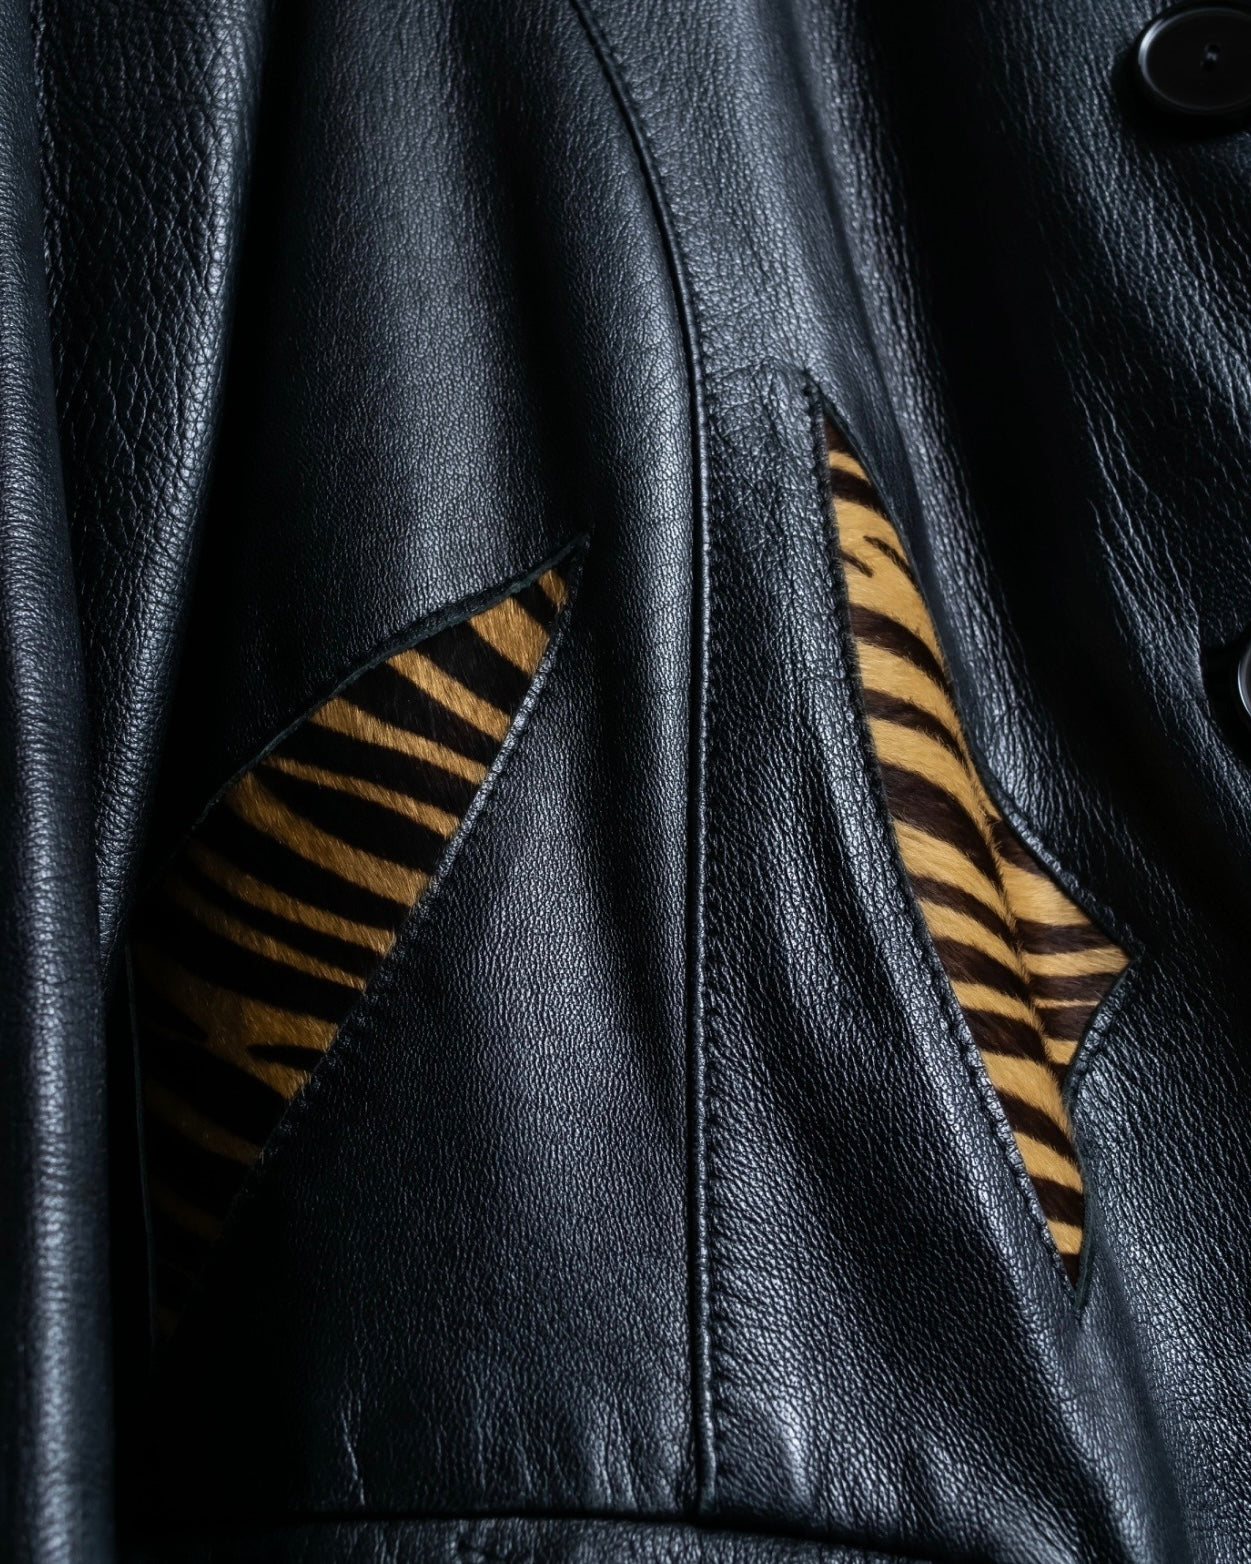 Harako Beautiful leather coat